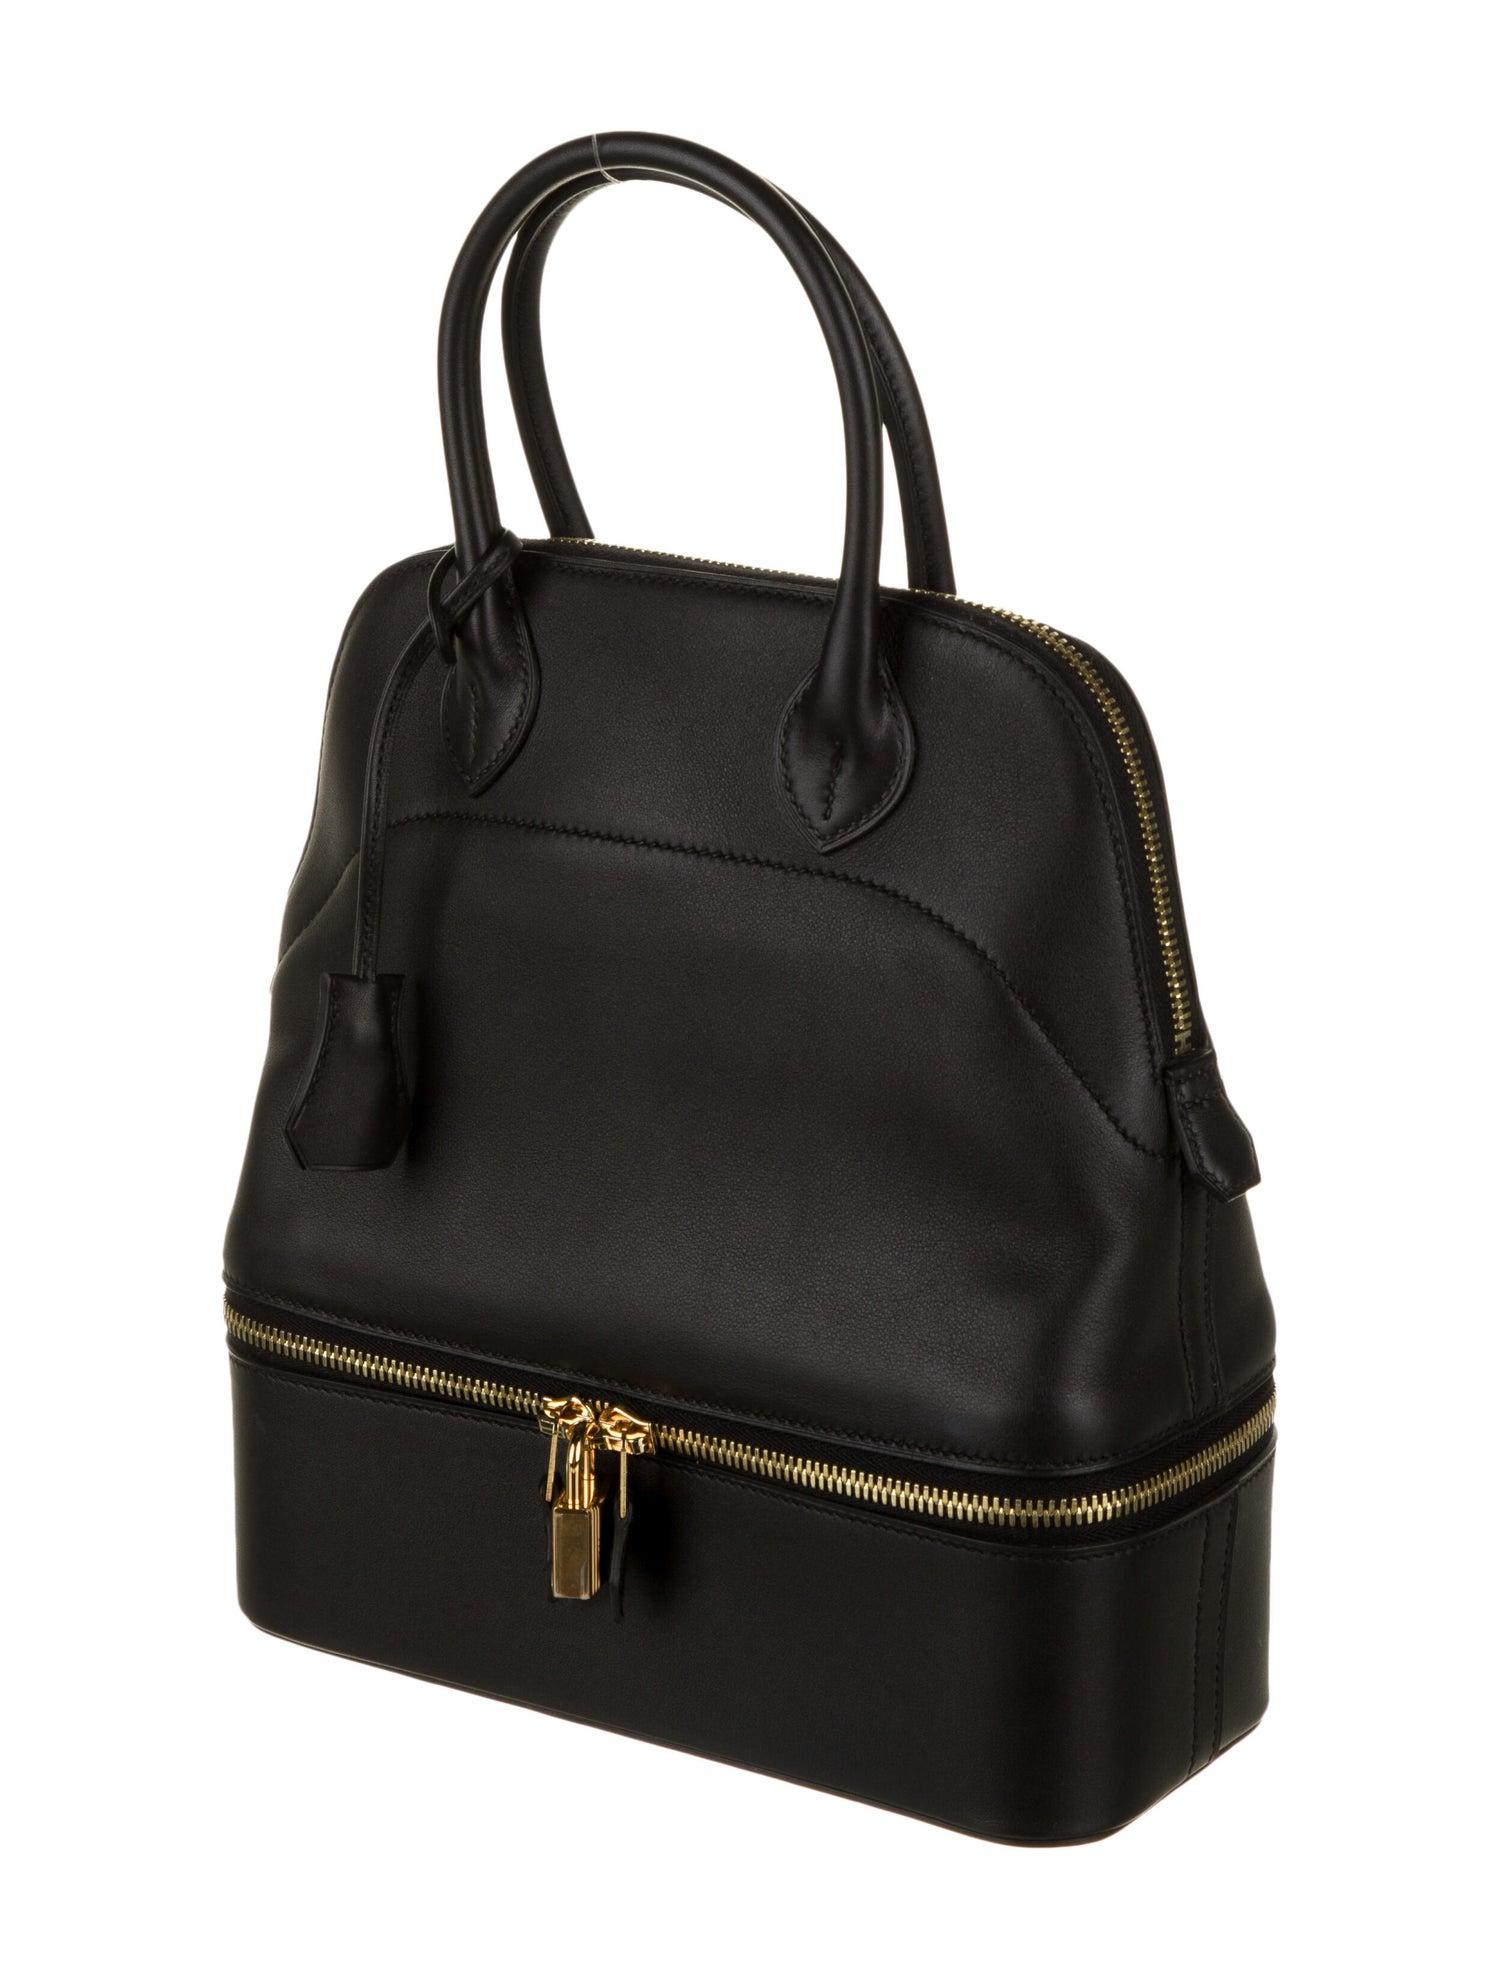 Hermes NEW Black Leather Gold Top Handle Satchel Men's Women's Travel Tote Bag 1